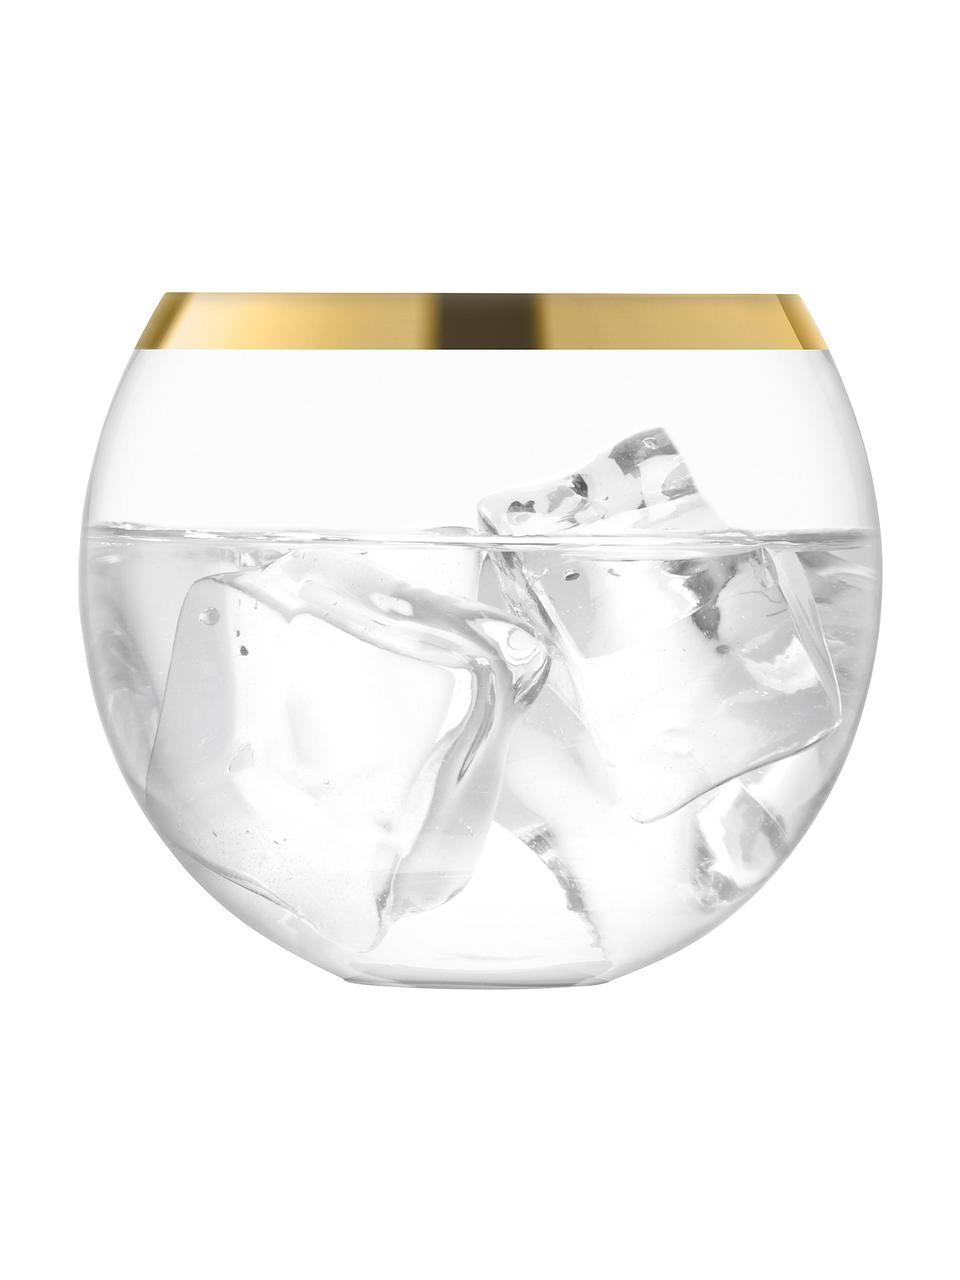 Mundgeblasene Cocktailgläser Luca mit Goldrand, 2 Stück, Glas, Transparent, Goldfarben, Ø 9 x H 8 cm, 330 ml